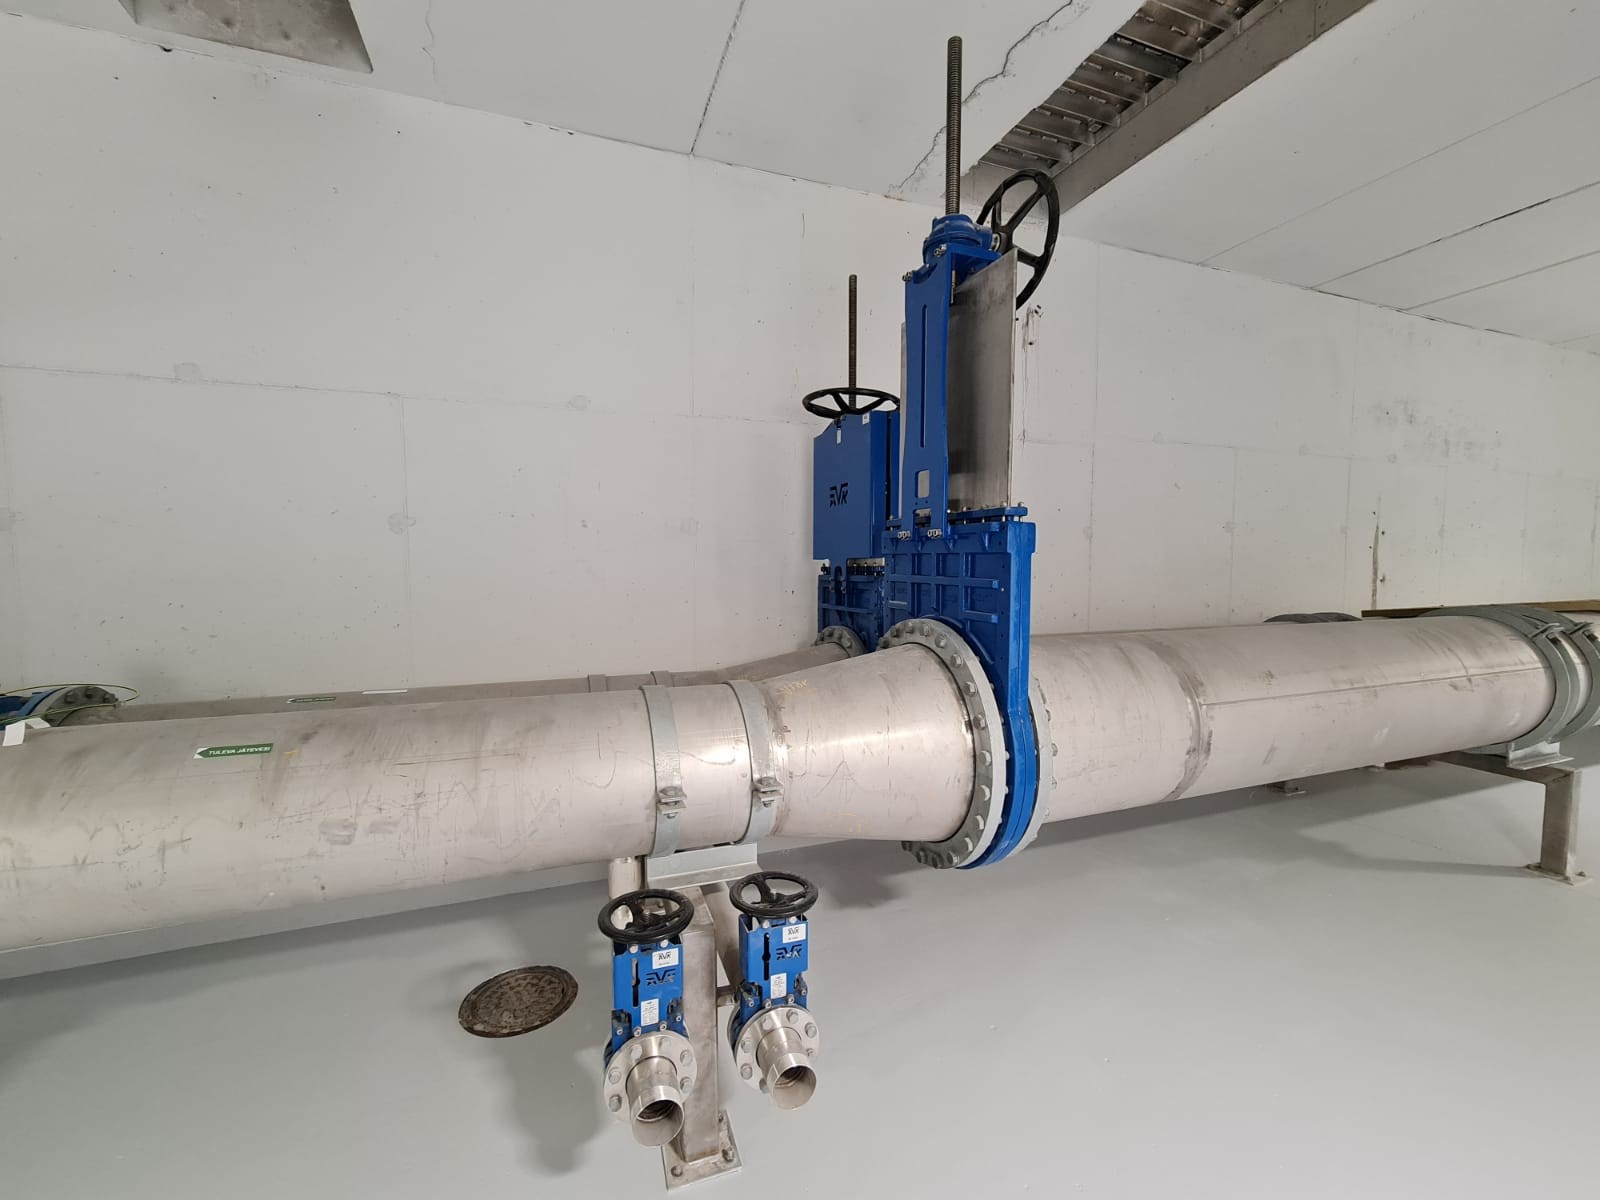 AVK valves installed at wastewater treatment plant in Mikkeli, Finland